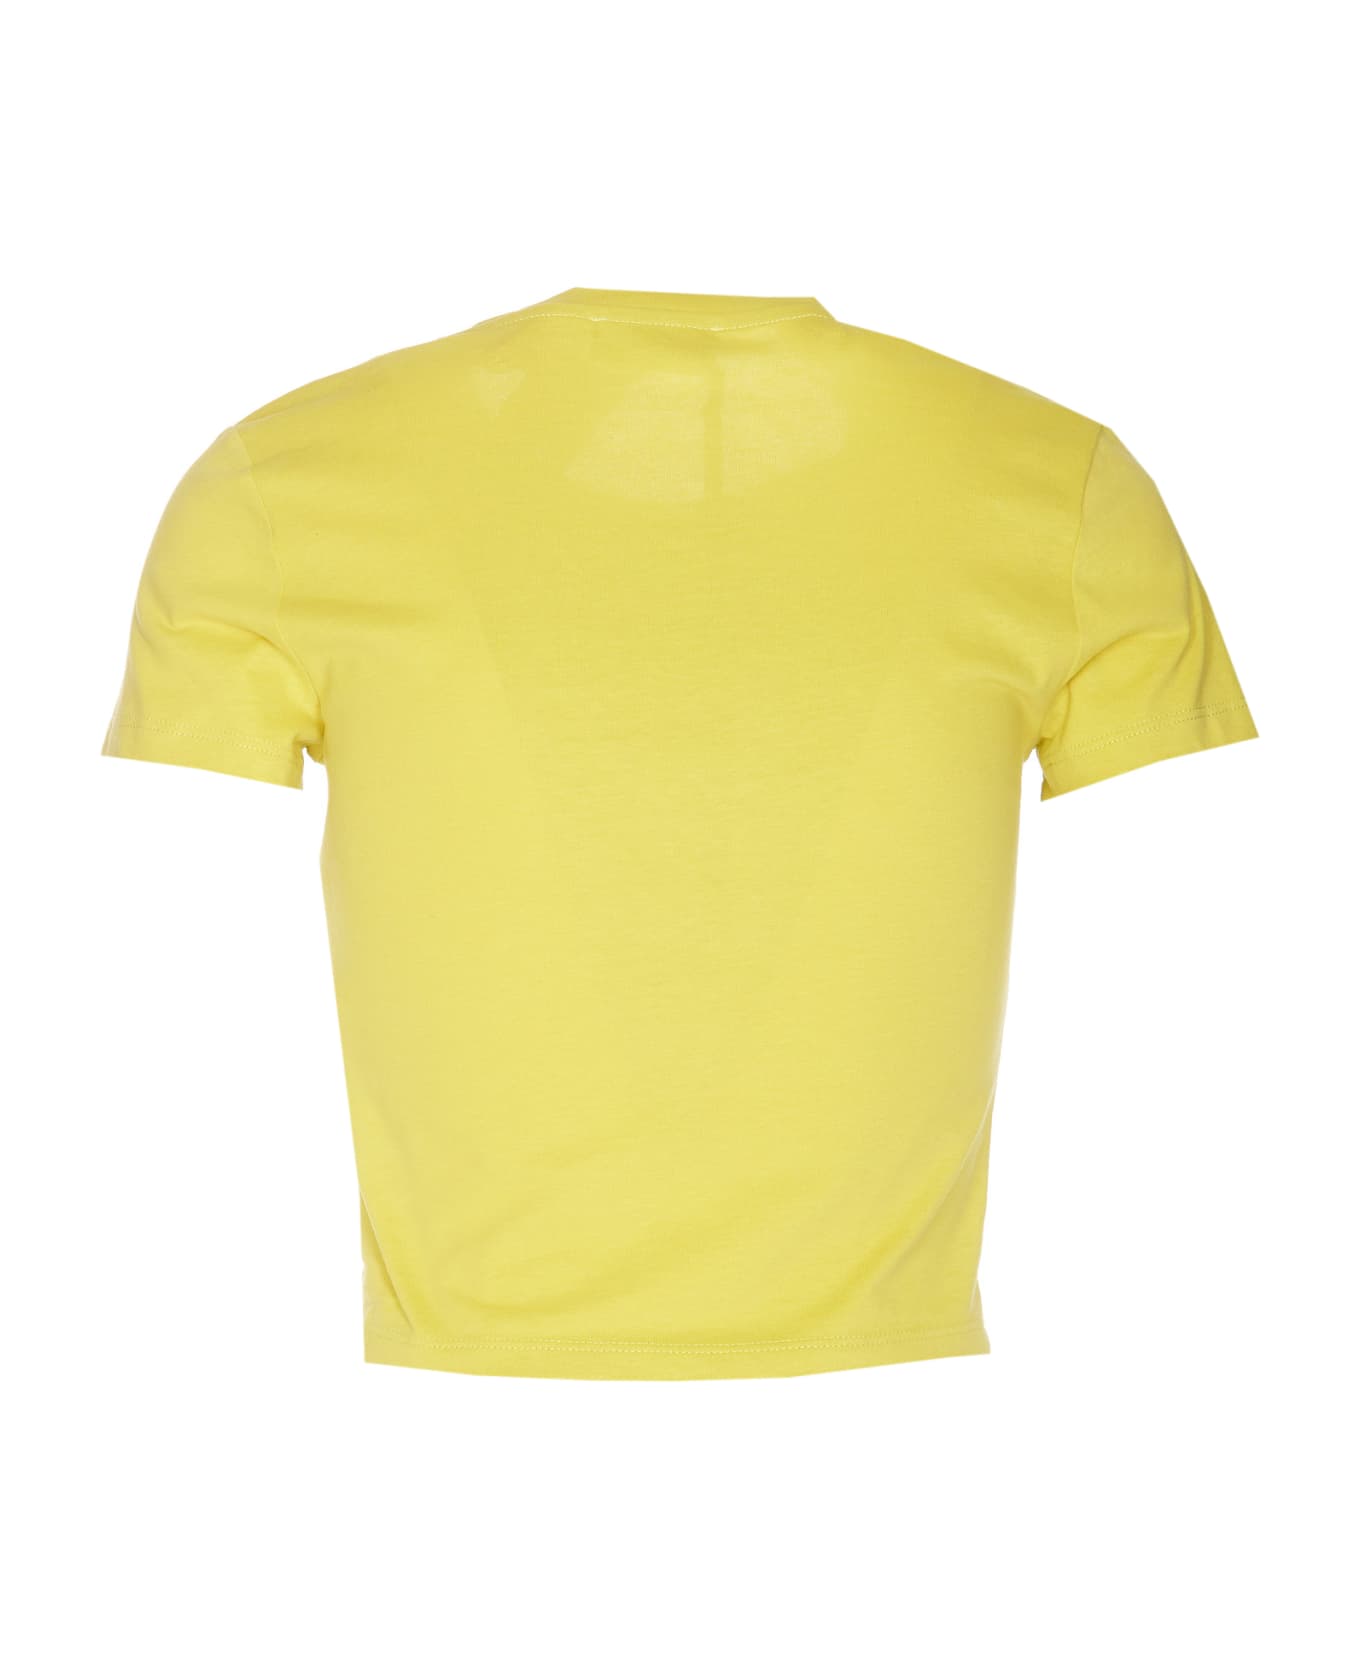 Elisabetta Franchi T-shirt - Yellow